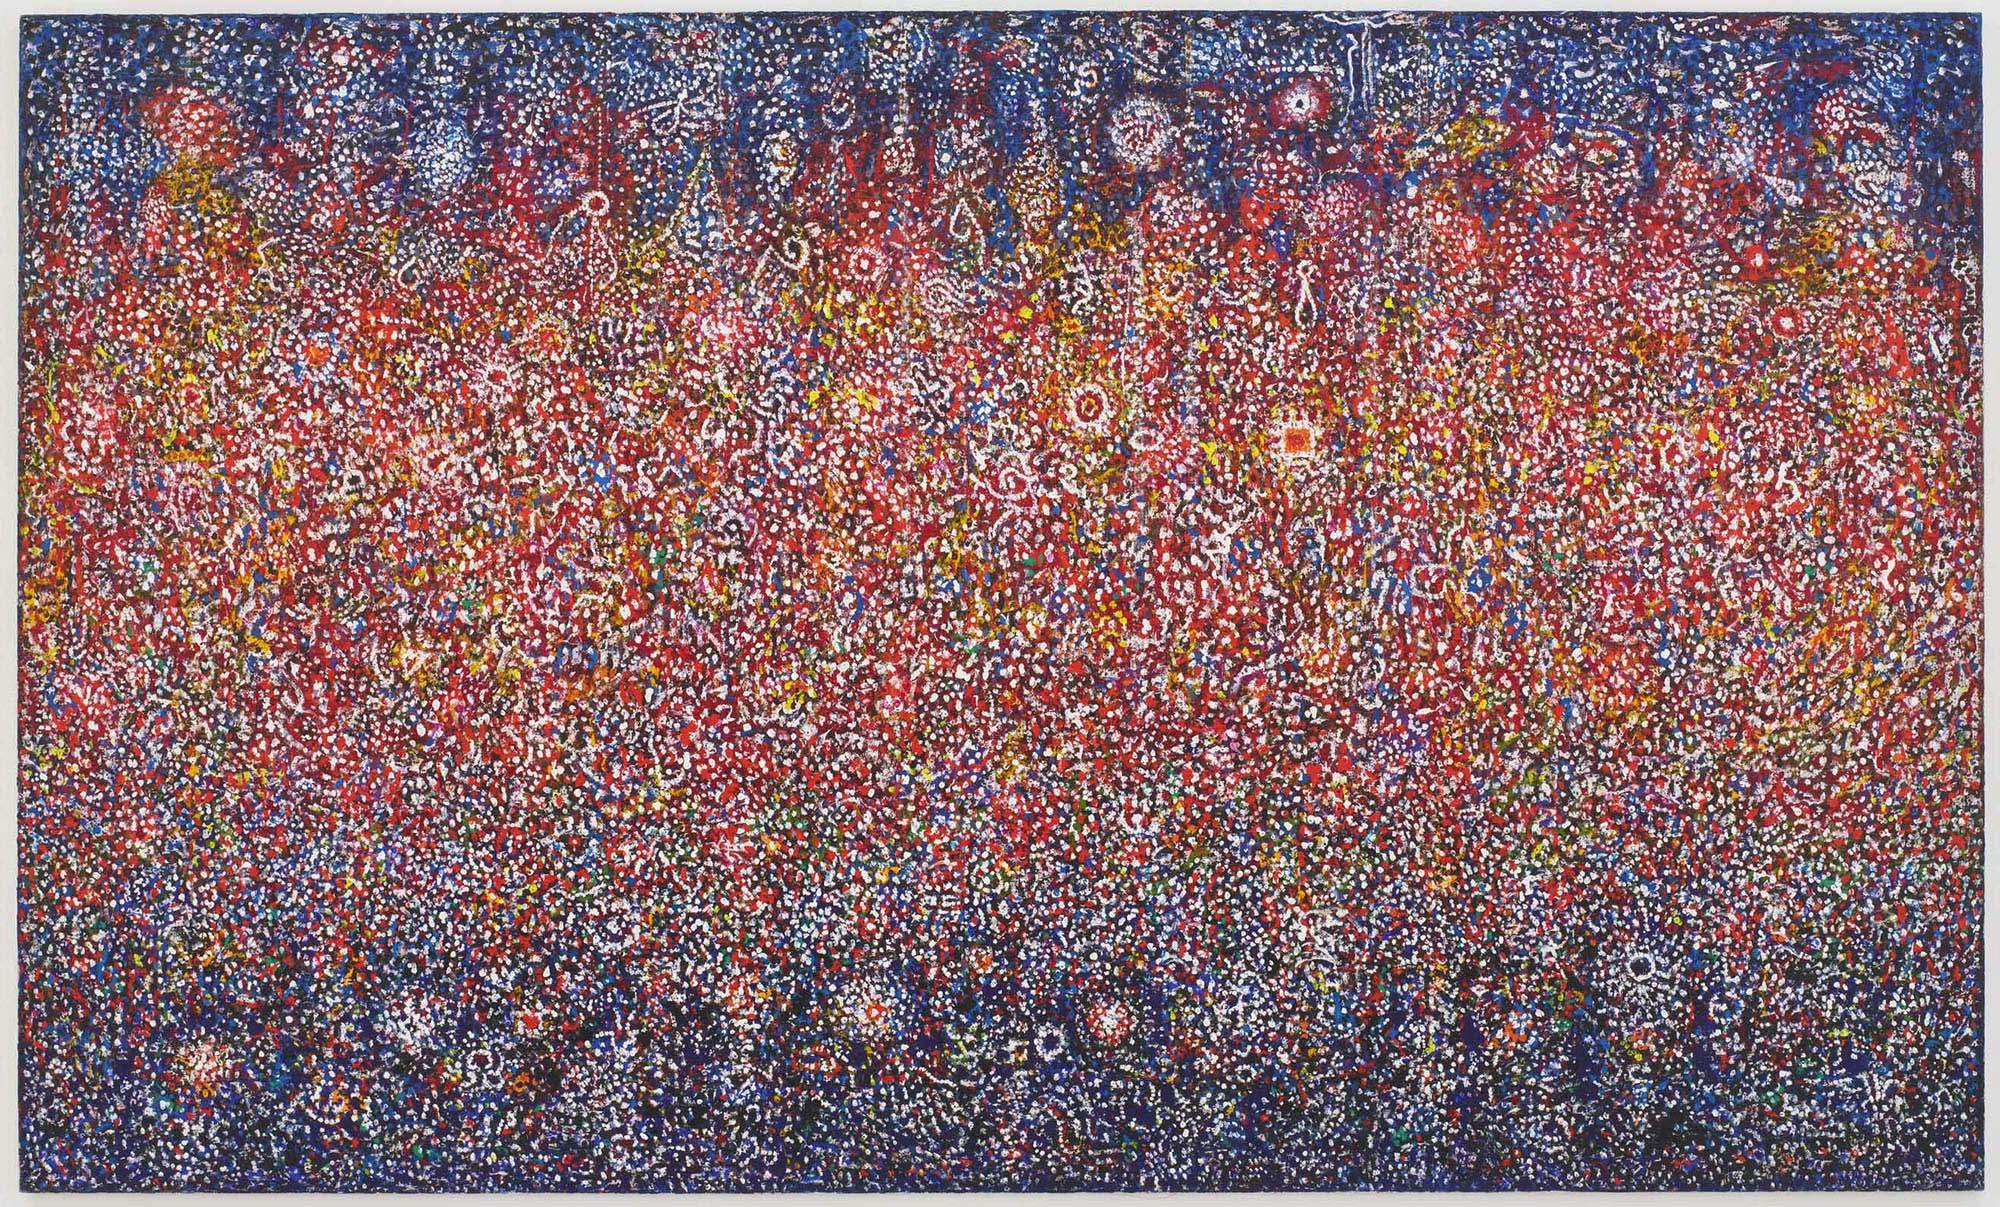 Celebration Birth
1975–76
Acrylic on linen
72 1/8 x 120 1/8 in. (183.2 x 305.1 cm)
 – The Richard Pousette-Dart Foundation